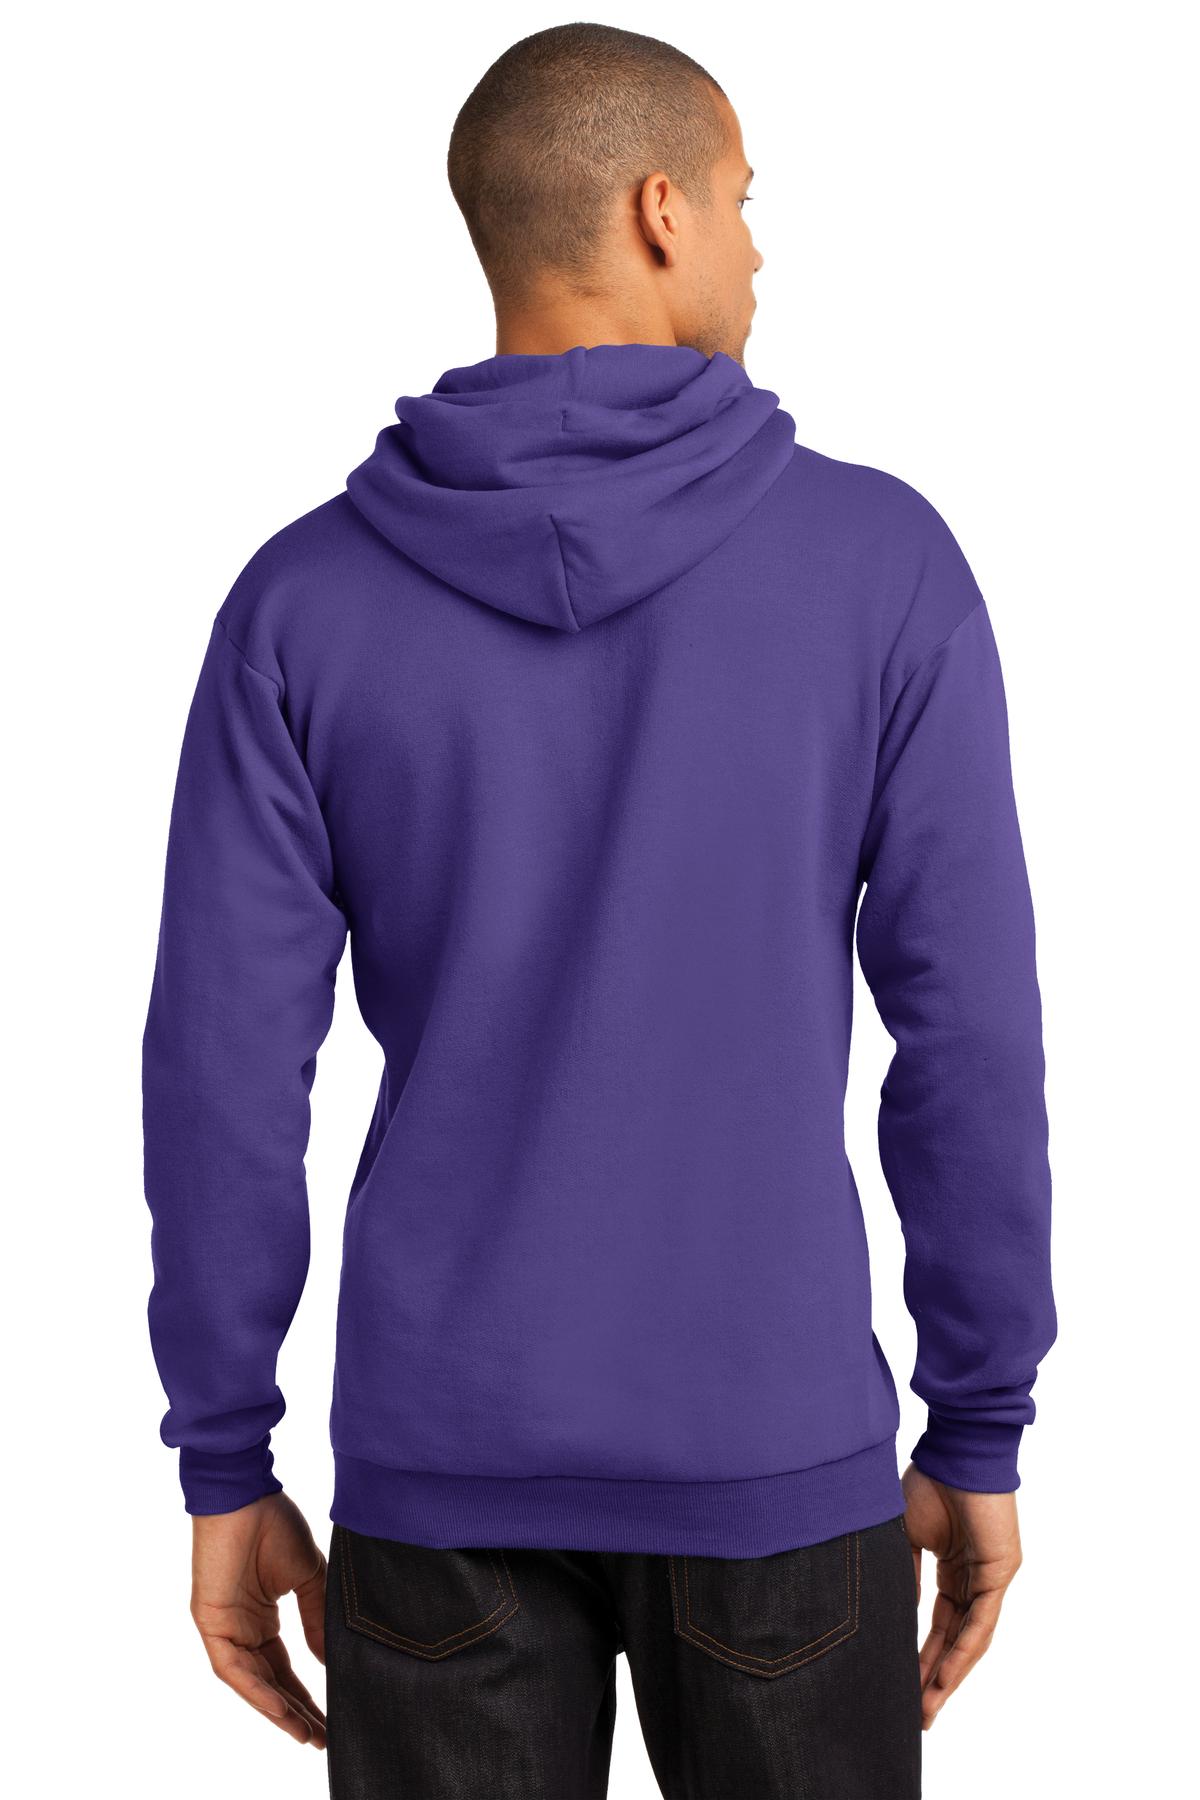 Port & Company® - Core Fleece Pullover Hooded Sweatshirt. PC78H [Purple] - DFW Impression